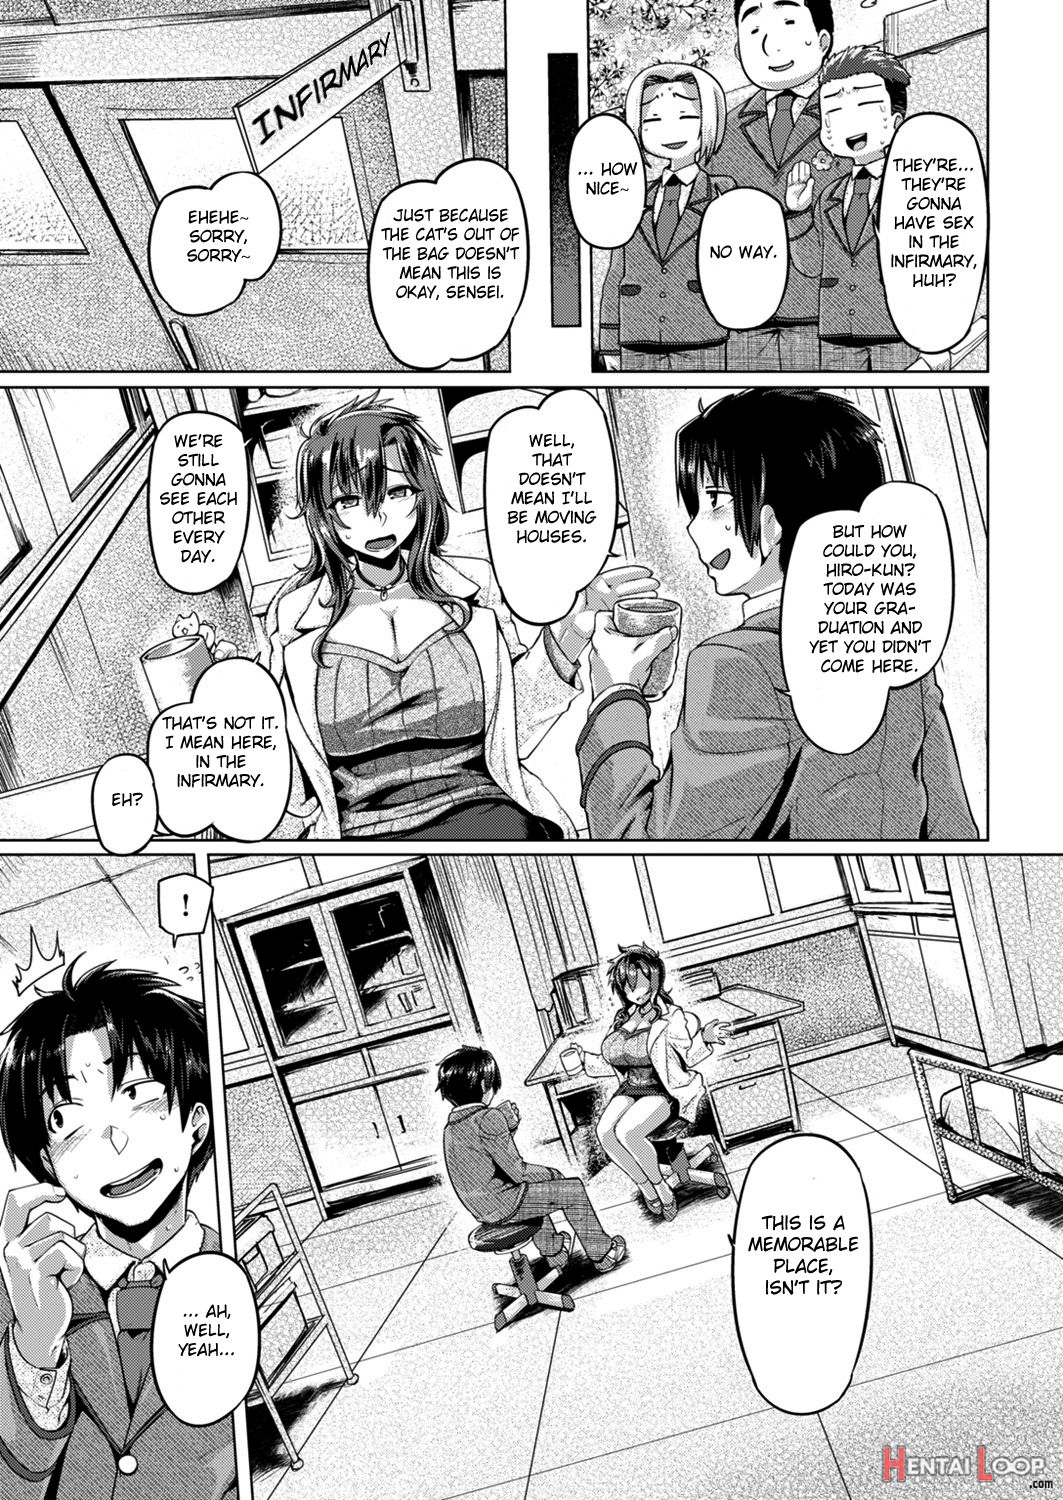 Chibusa-sensei Celebration page 3